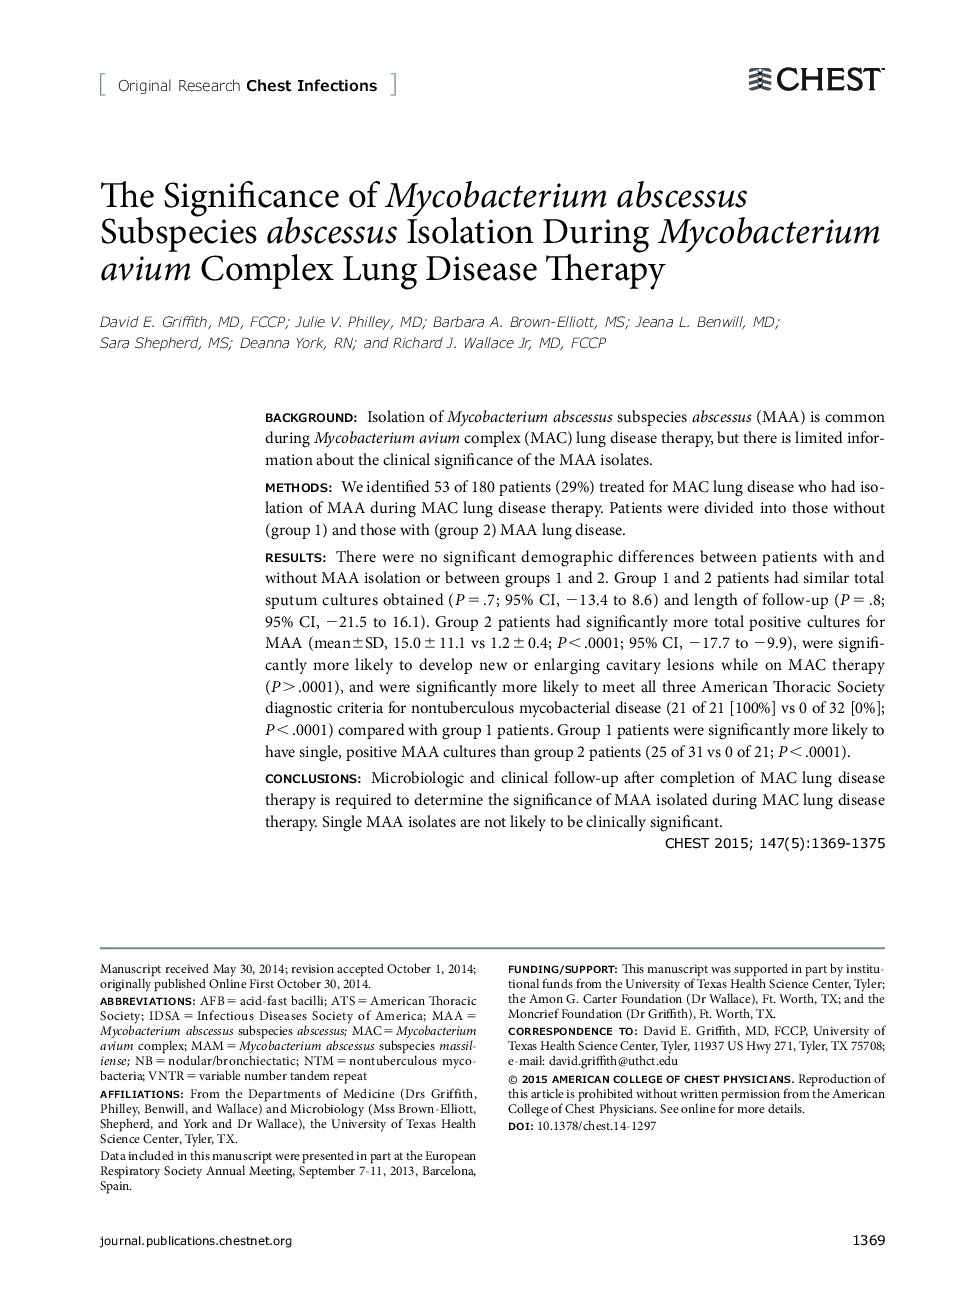 The Significance of Mycobacterium abscessus Subspecies abscessus Isolation During Mycobacterium avium Complex Lung Disease Therapy